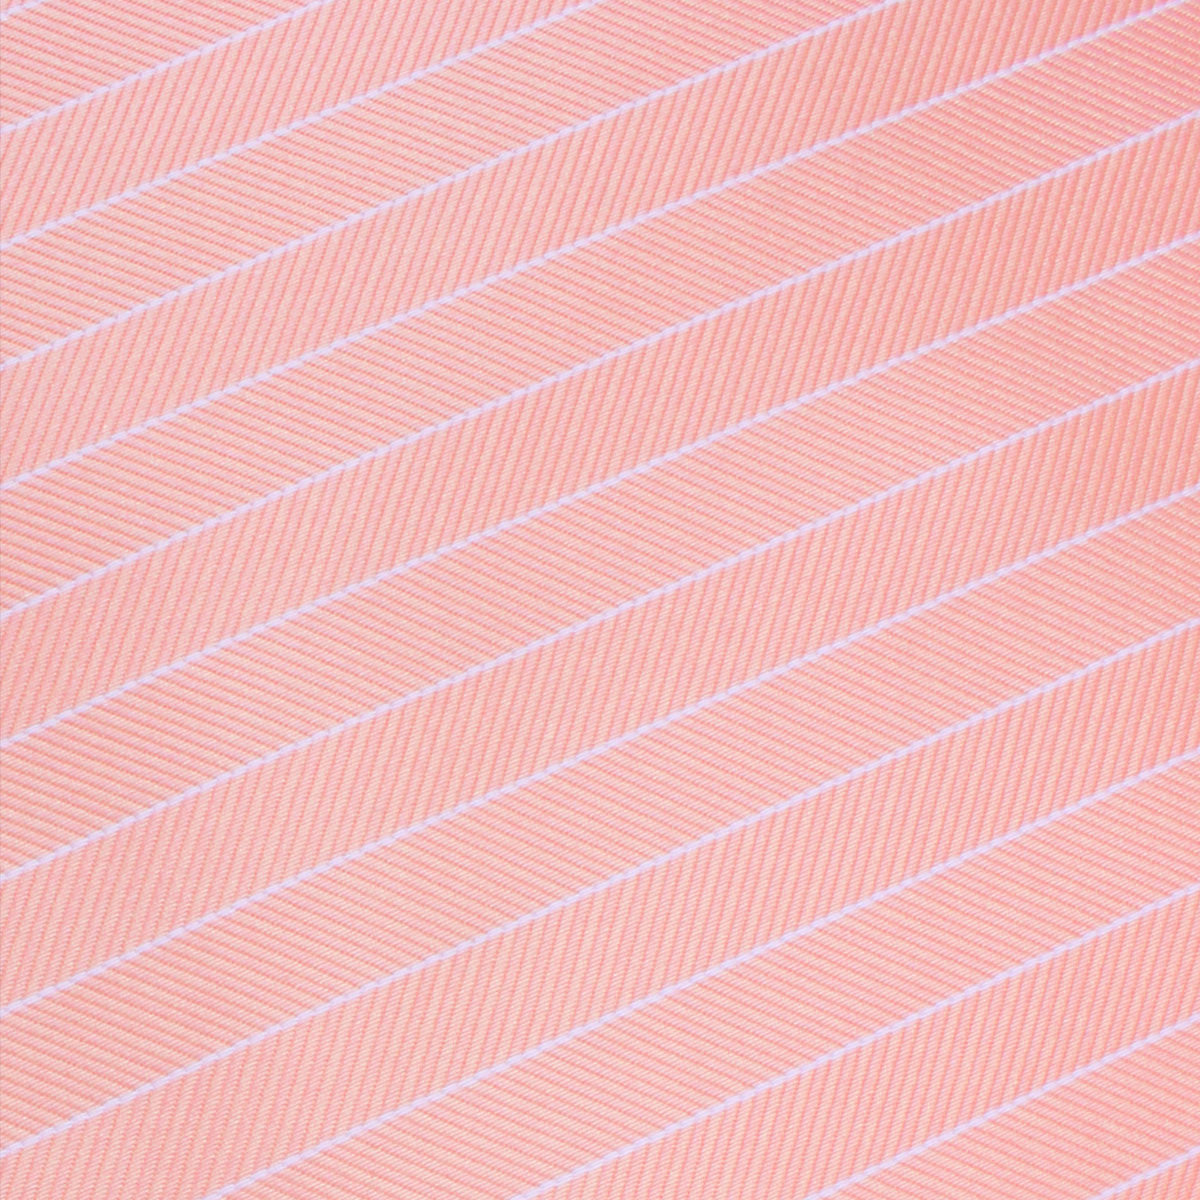 Blush Pink Herringbone Pinstripe Kids Bow Tie Fabric